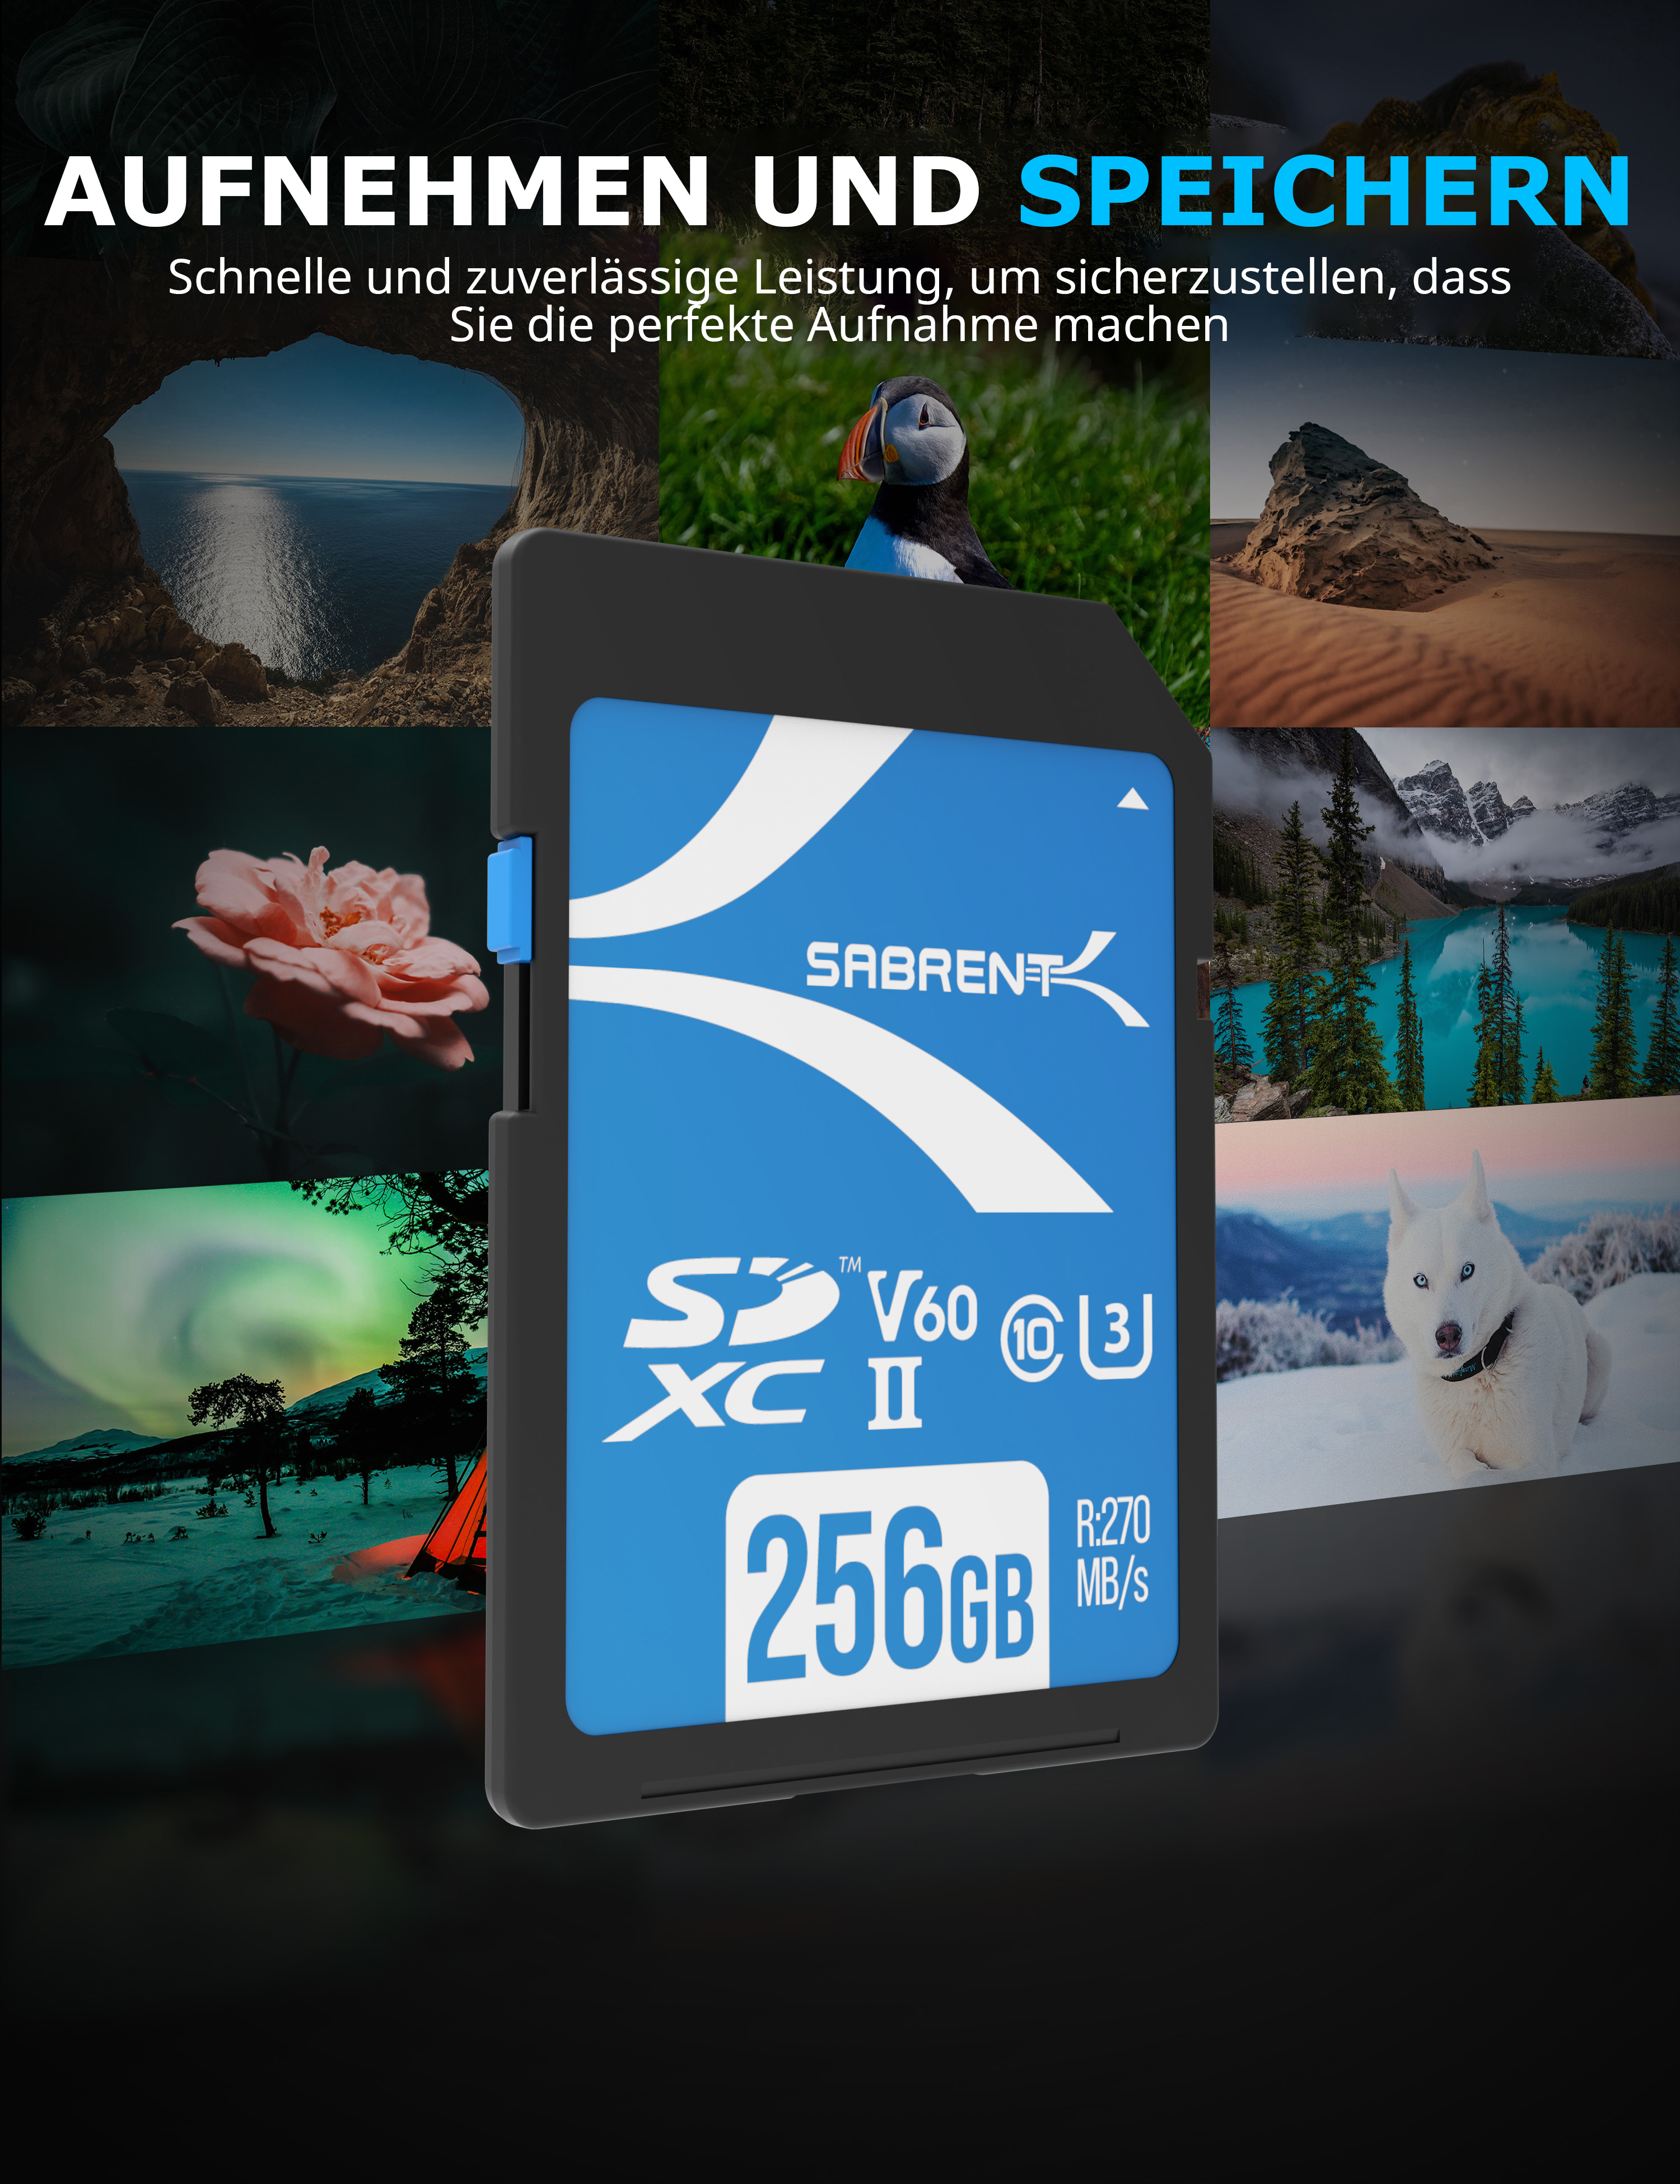 SABRENT V60 256GB SD SD 256 270 Karte, GB, MB/s SDXC UHS-II